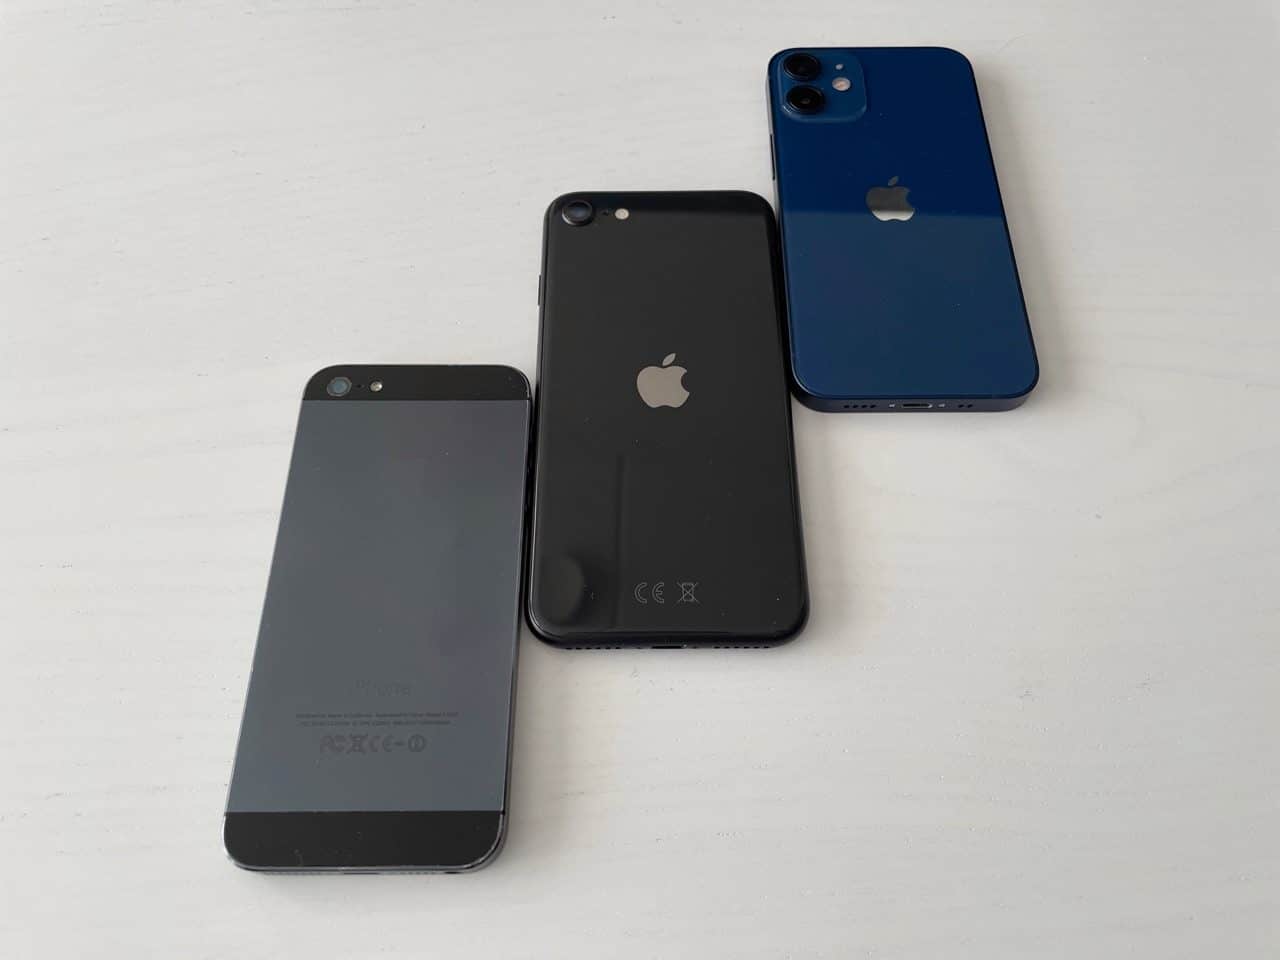 iPhone 5 vs iPhone SE 2020 vs iPhone 12 mini.